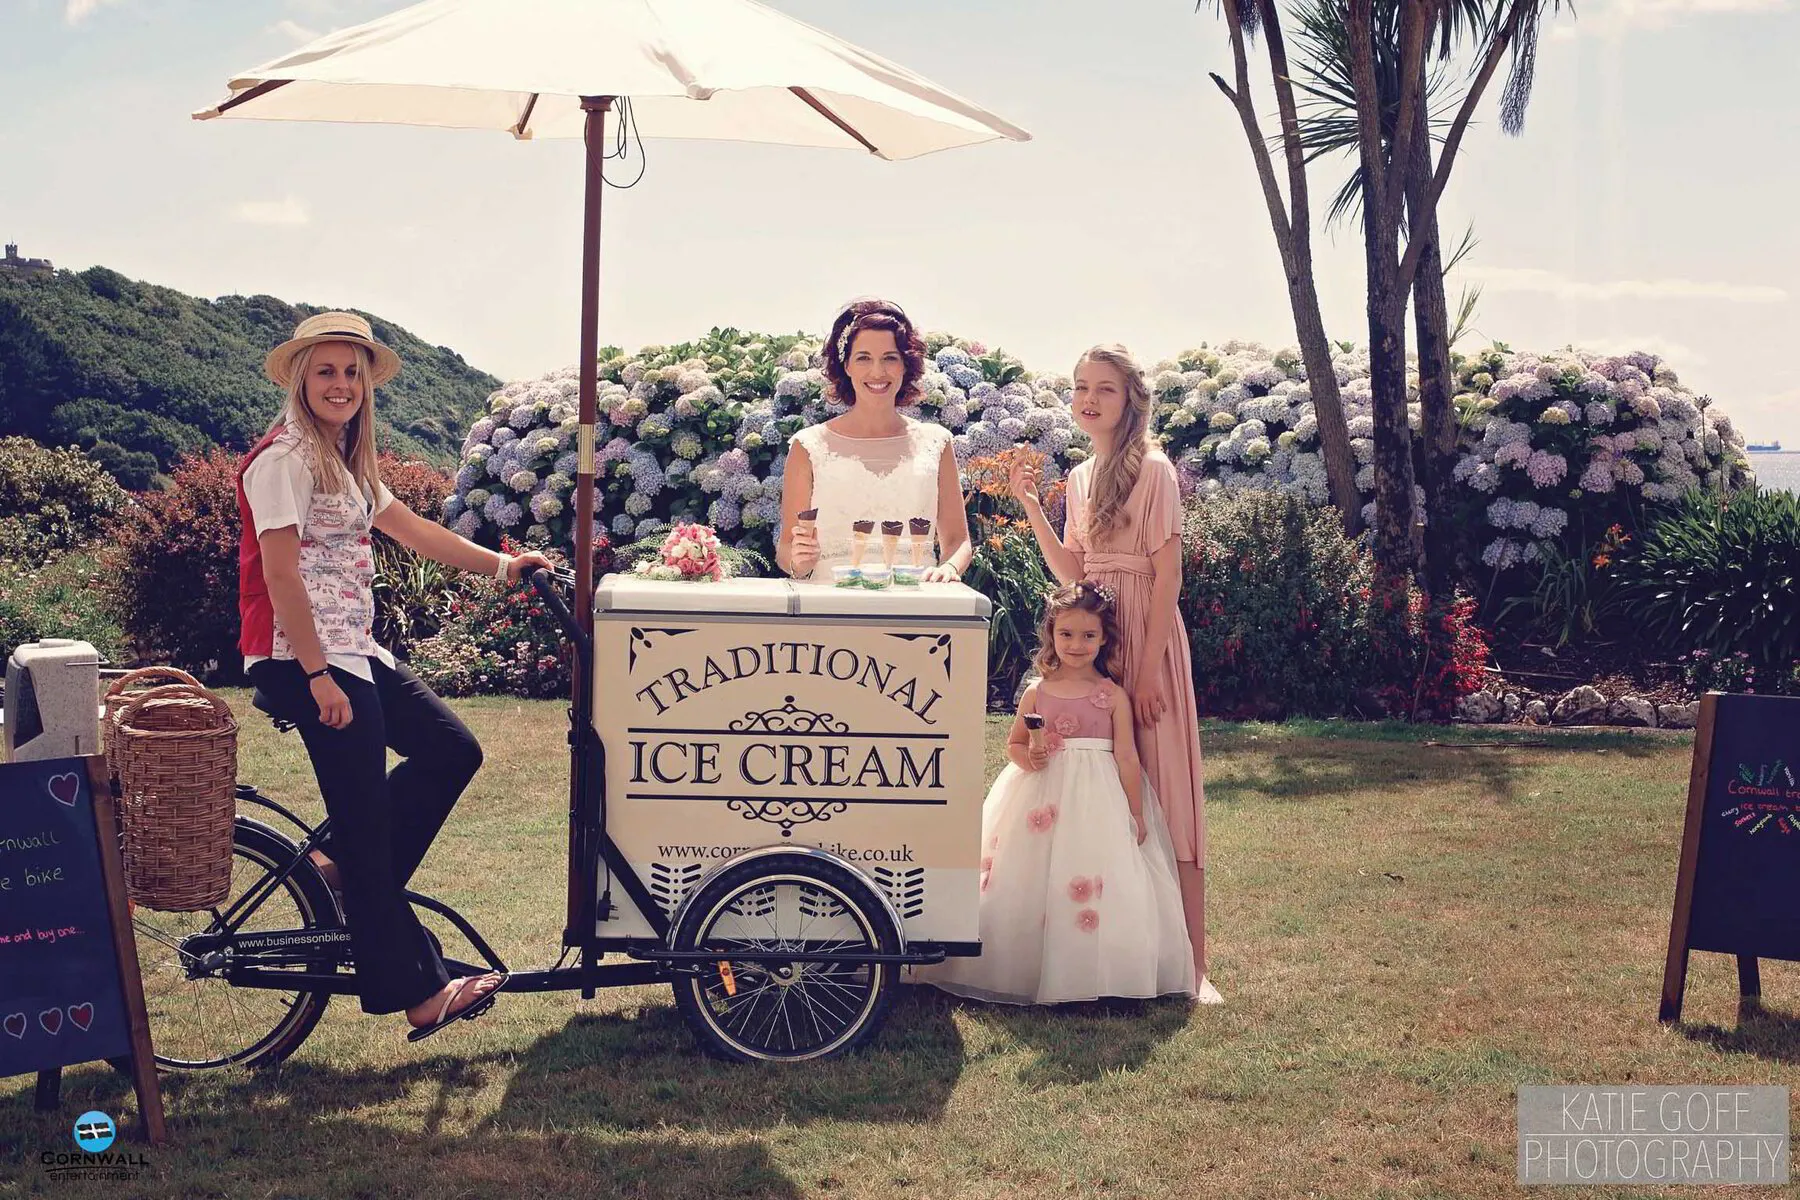 Cornwall Entertainment - Ice Cream Bike Rental Services